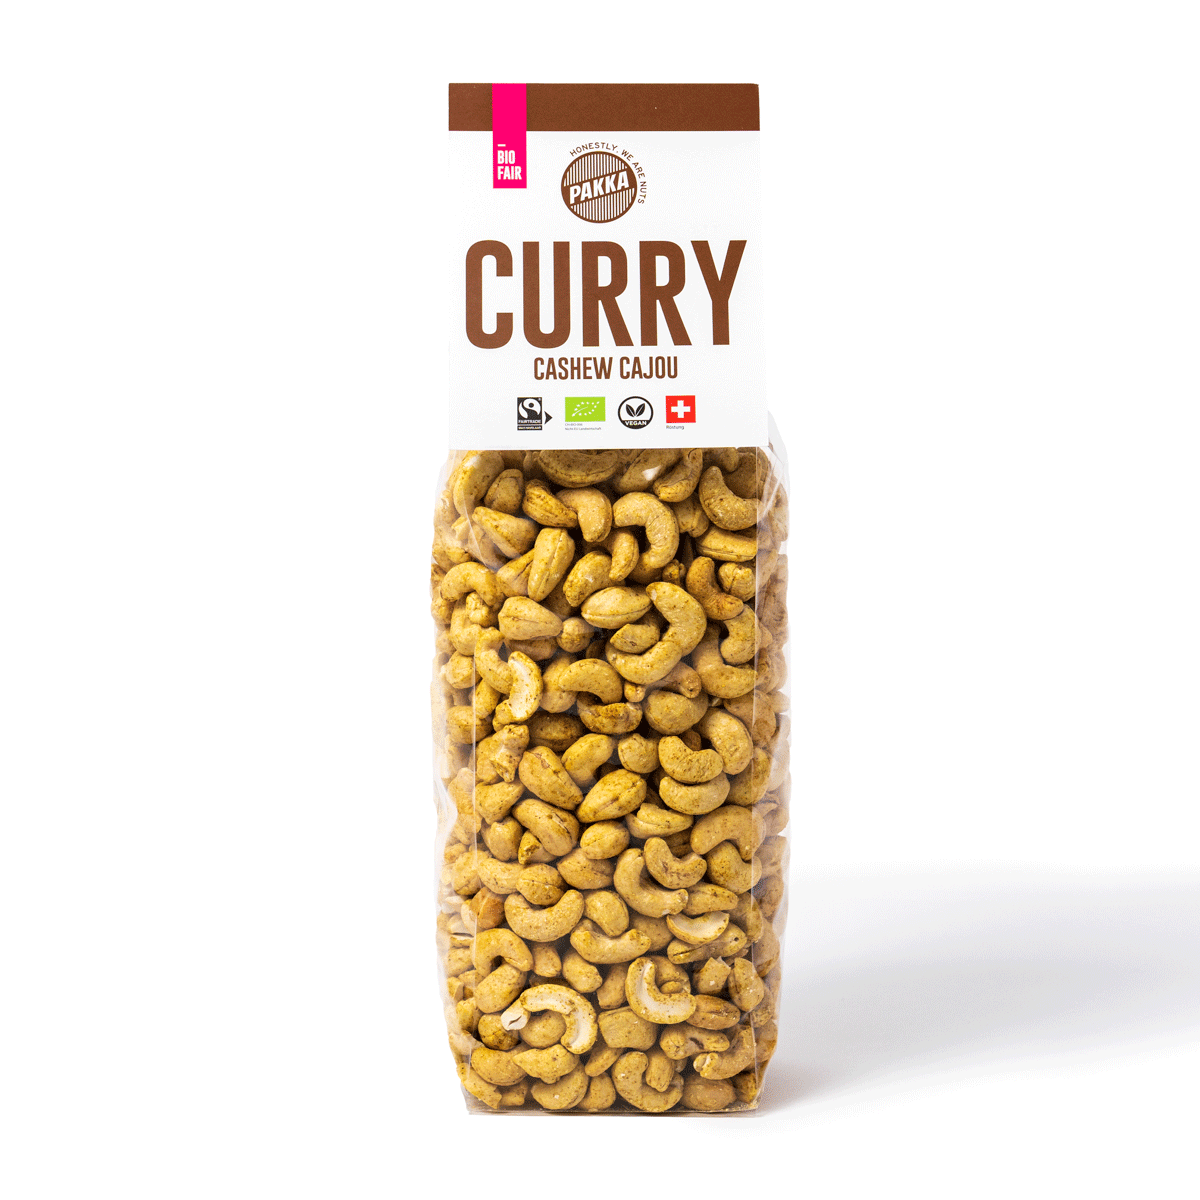 Cashew geröstet, Curry Madras